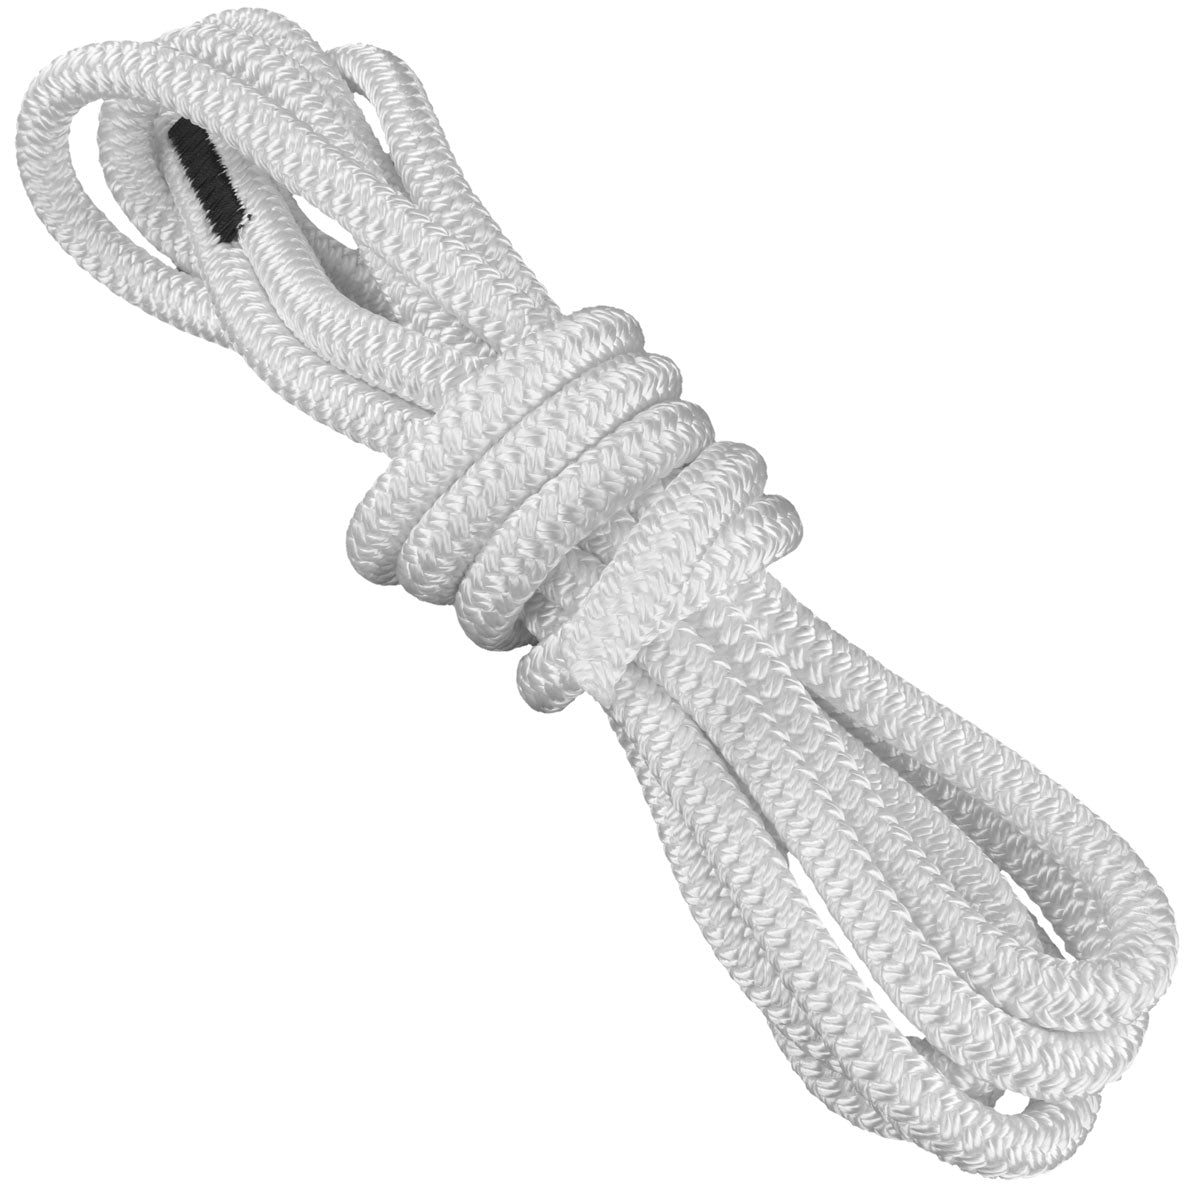 Marine Soft Rope & Fittings